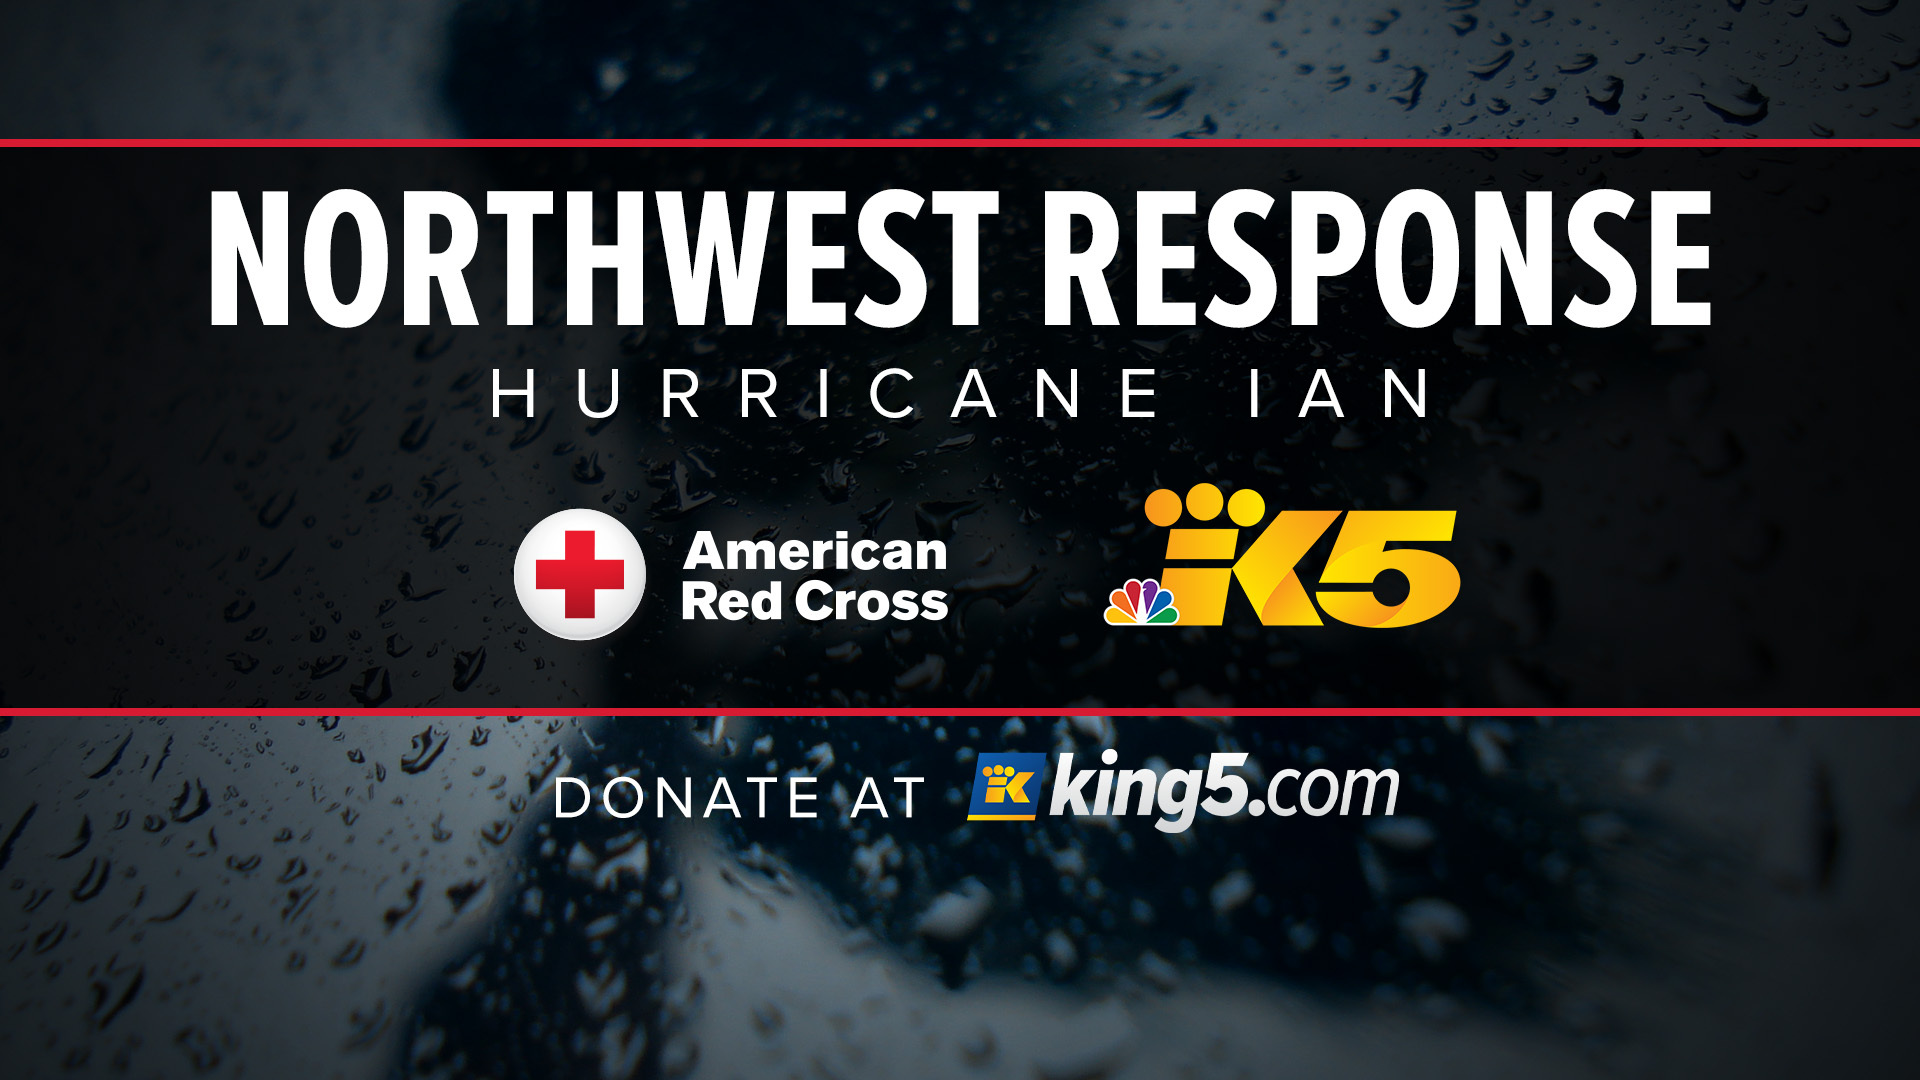 How to donate to help Hurricane Ian victims | Northwest Response